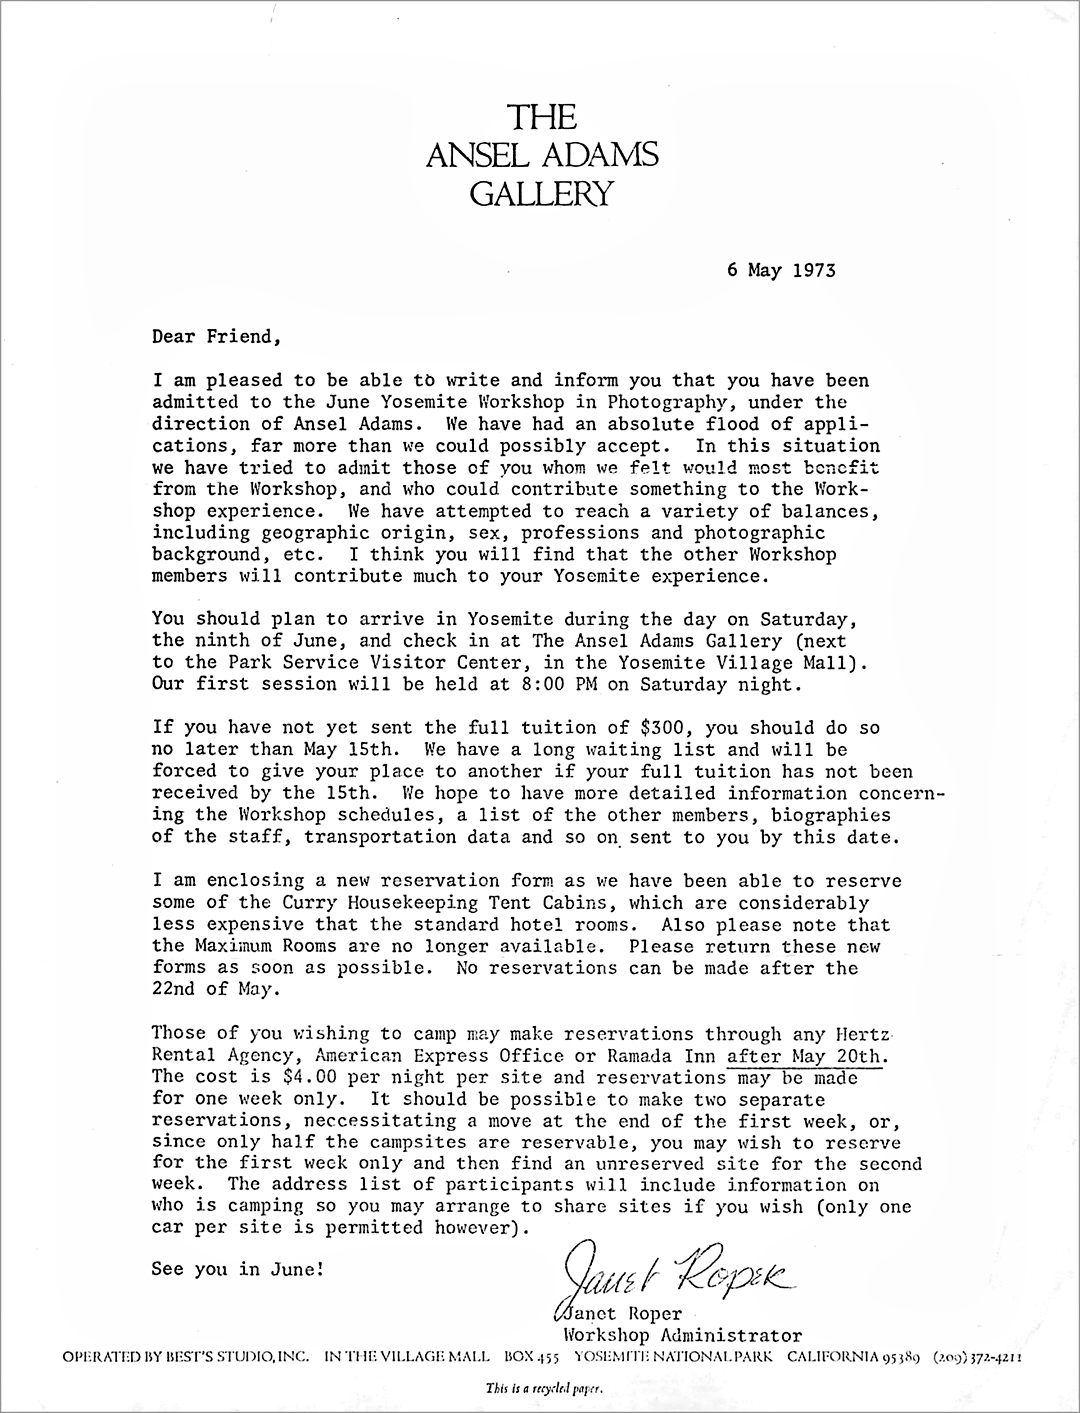 1973 Ansel Adams Workshop Acceptance Letter